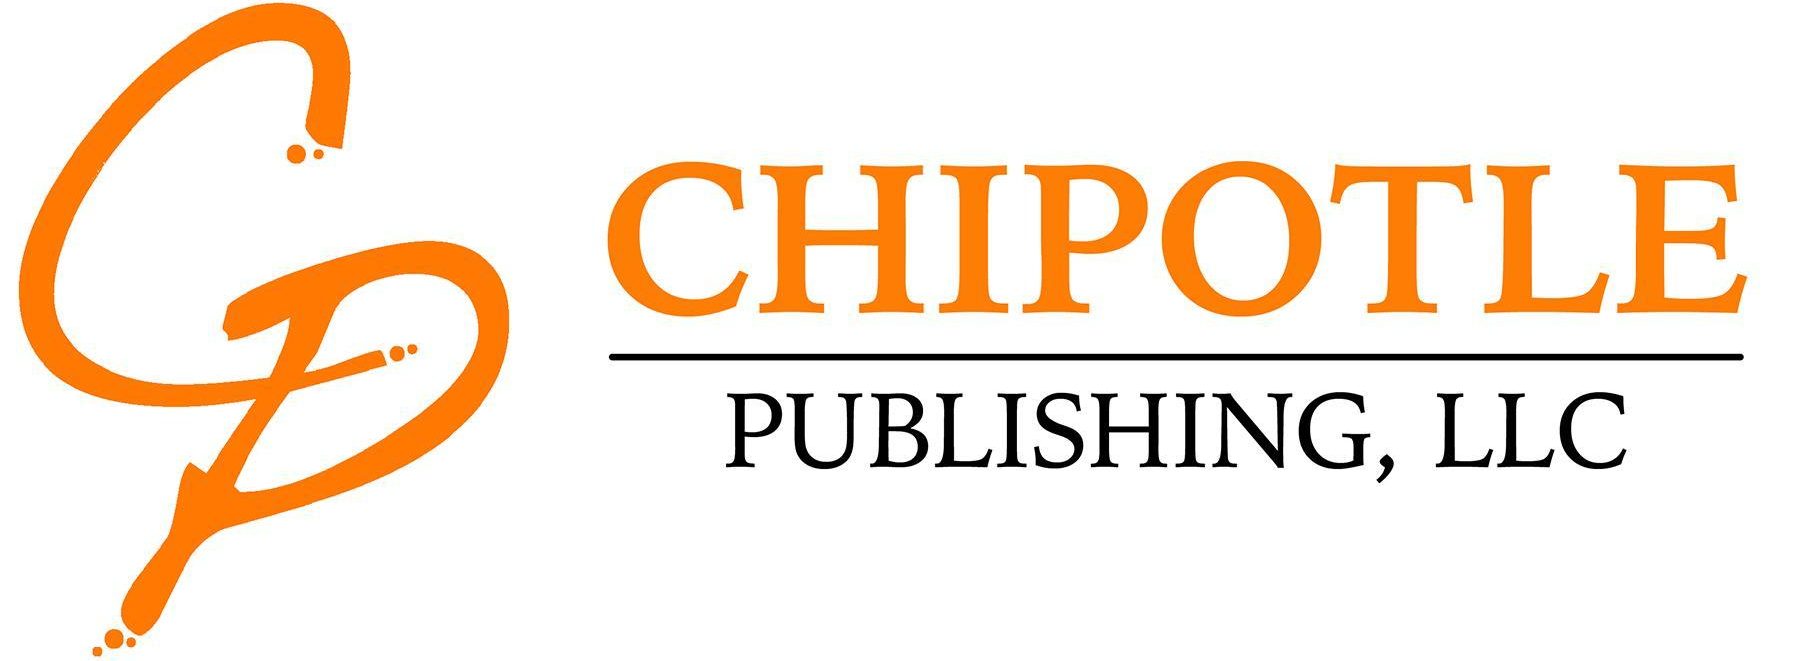 Chipotle Publishing, LLC